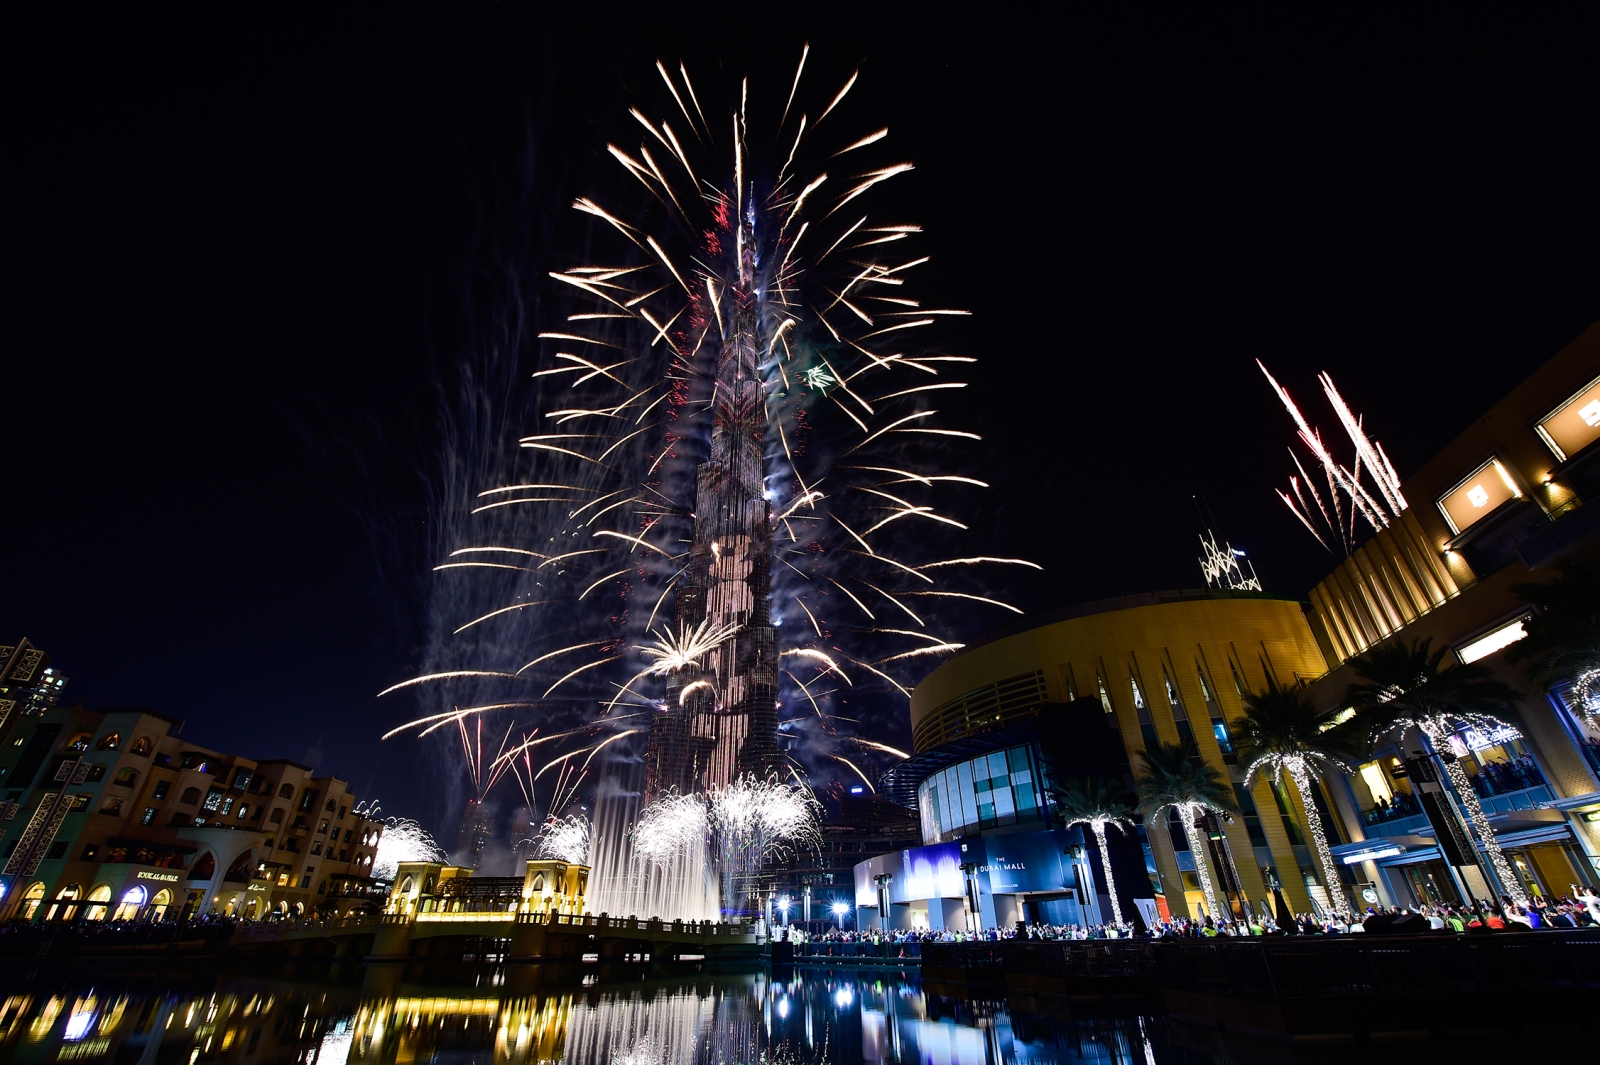 No fireworks at Dubai's Burj Khalifa on New Year 2018: Here's why